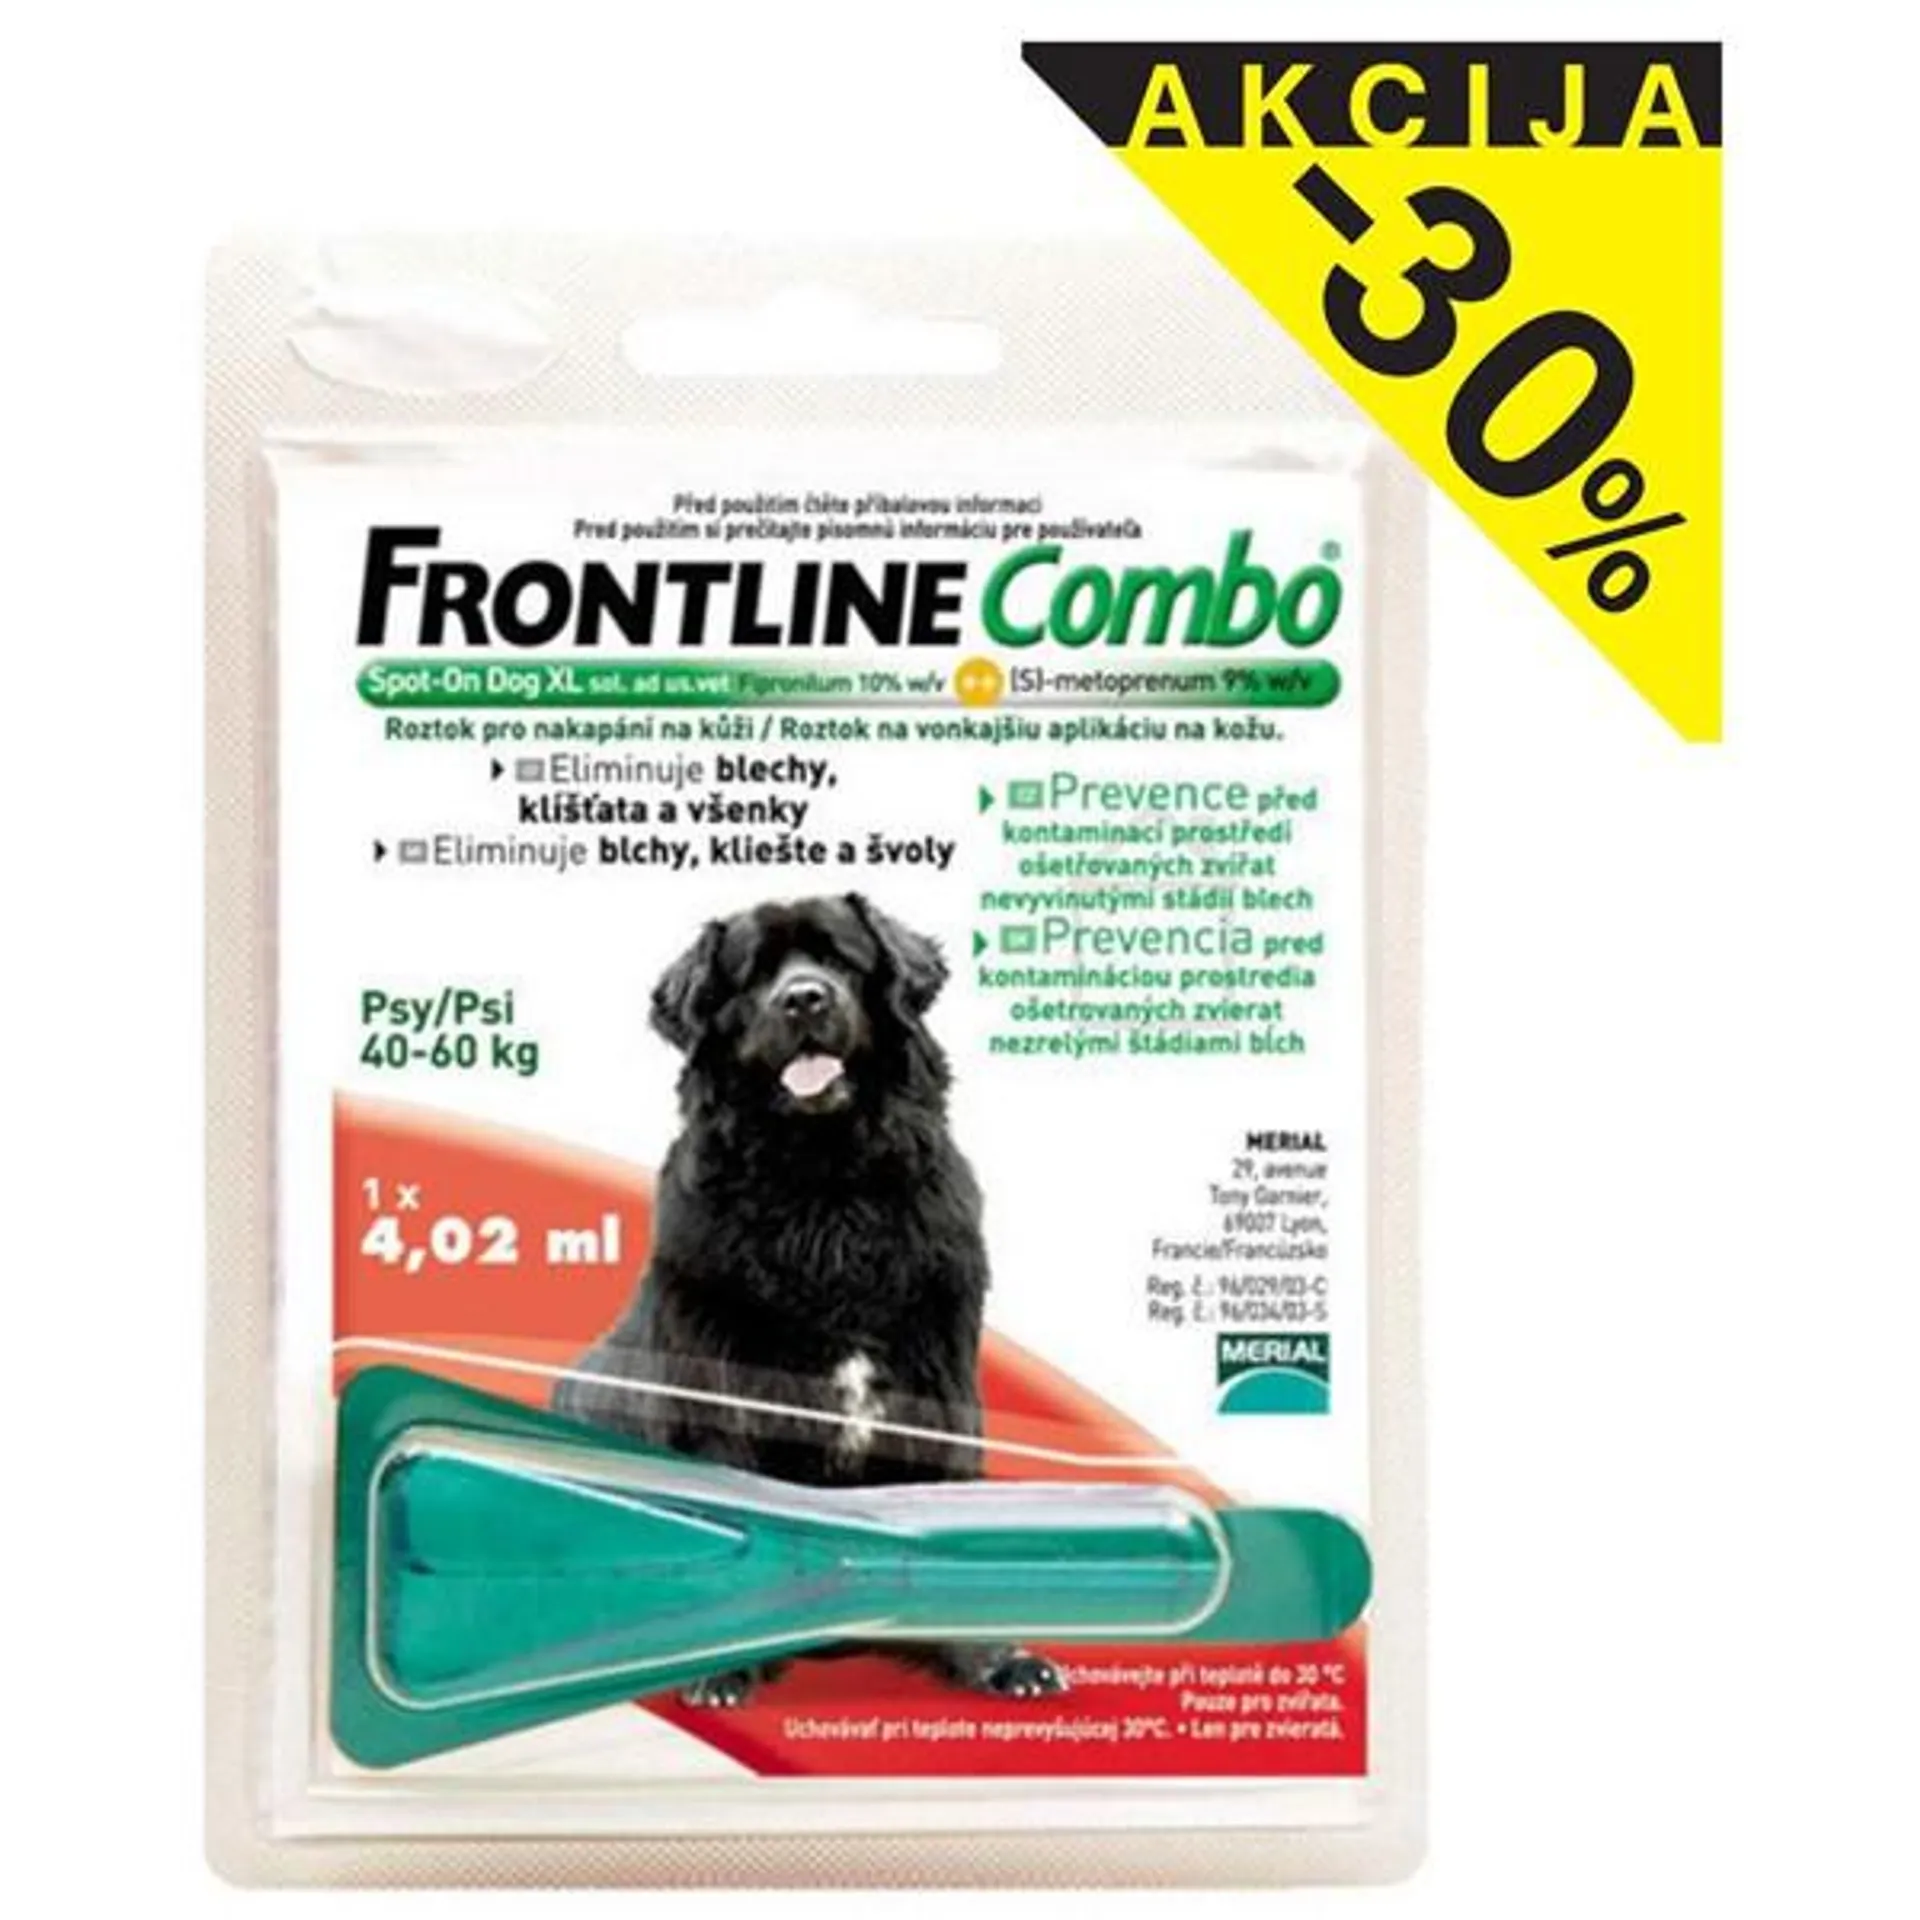 FRONTLINE® (Boehringer) Combo ampula za pse od 40kg, 1x4,02ml, -30%